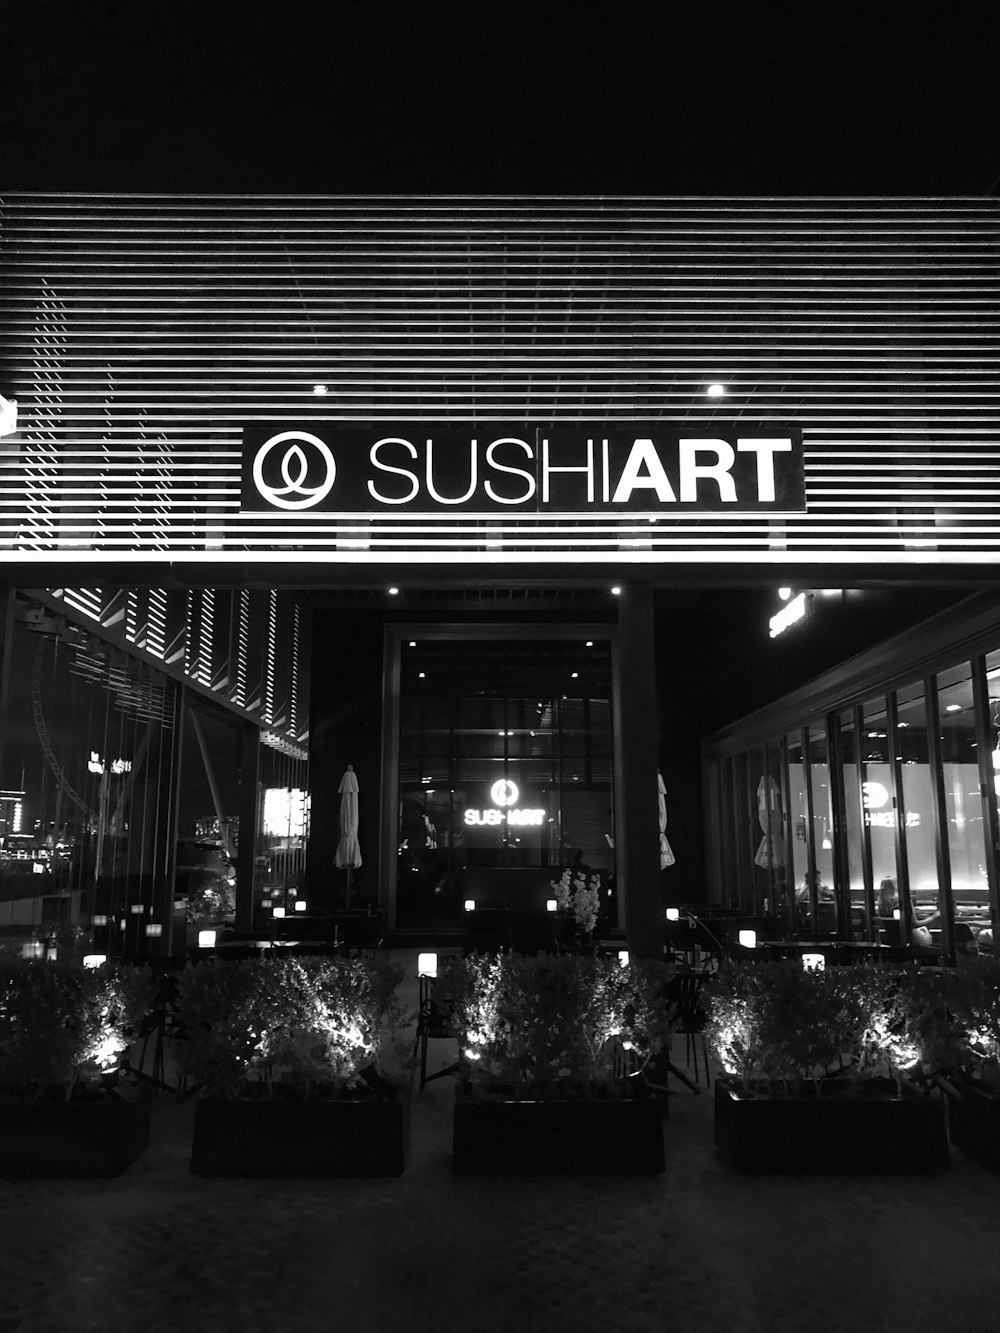 Restaurante Sushi Art en foto en escala de grises